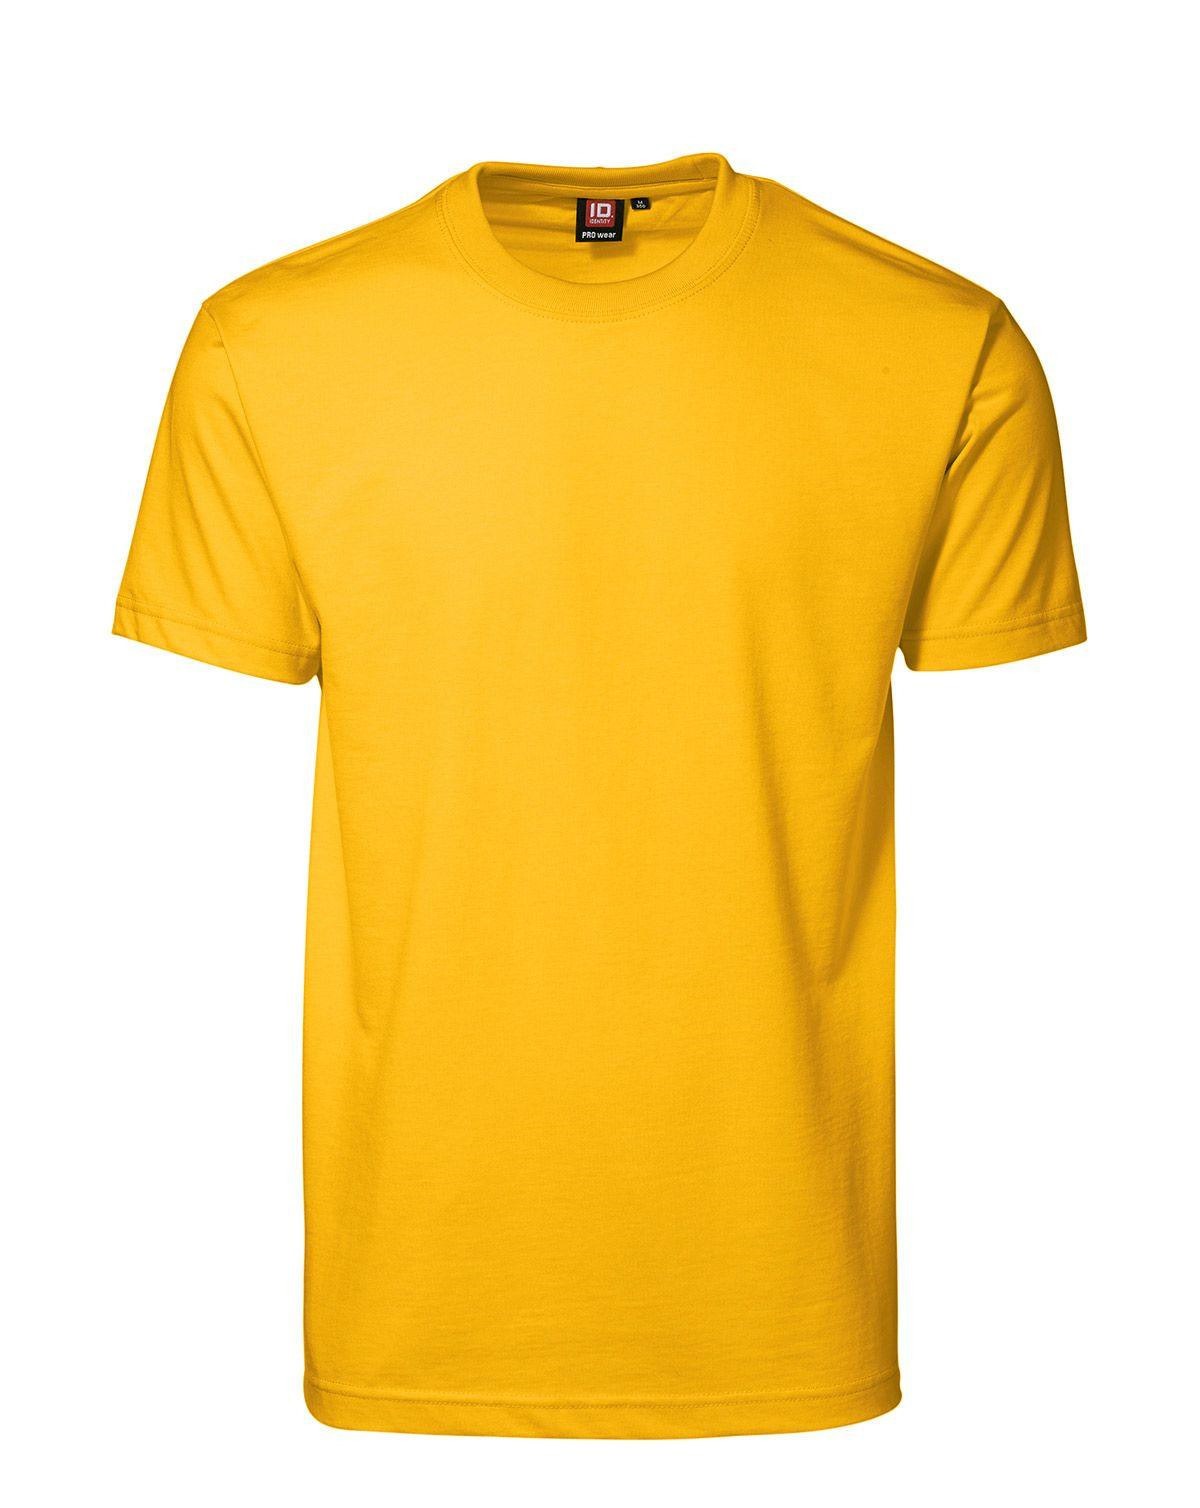 ID PRO Wear T-shirt til Herre (Gul, 3XL)